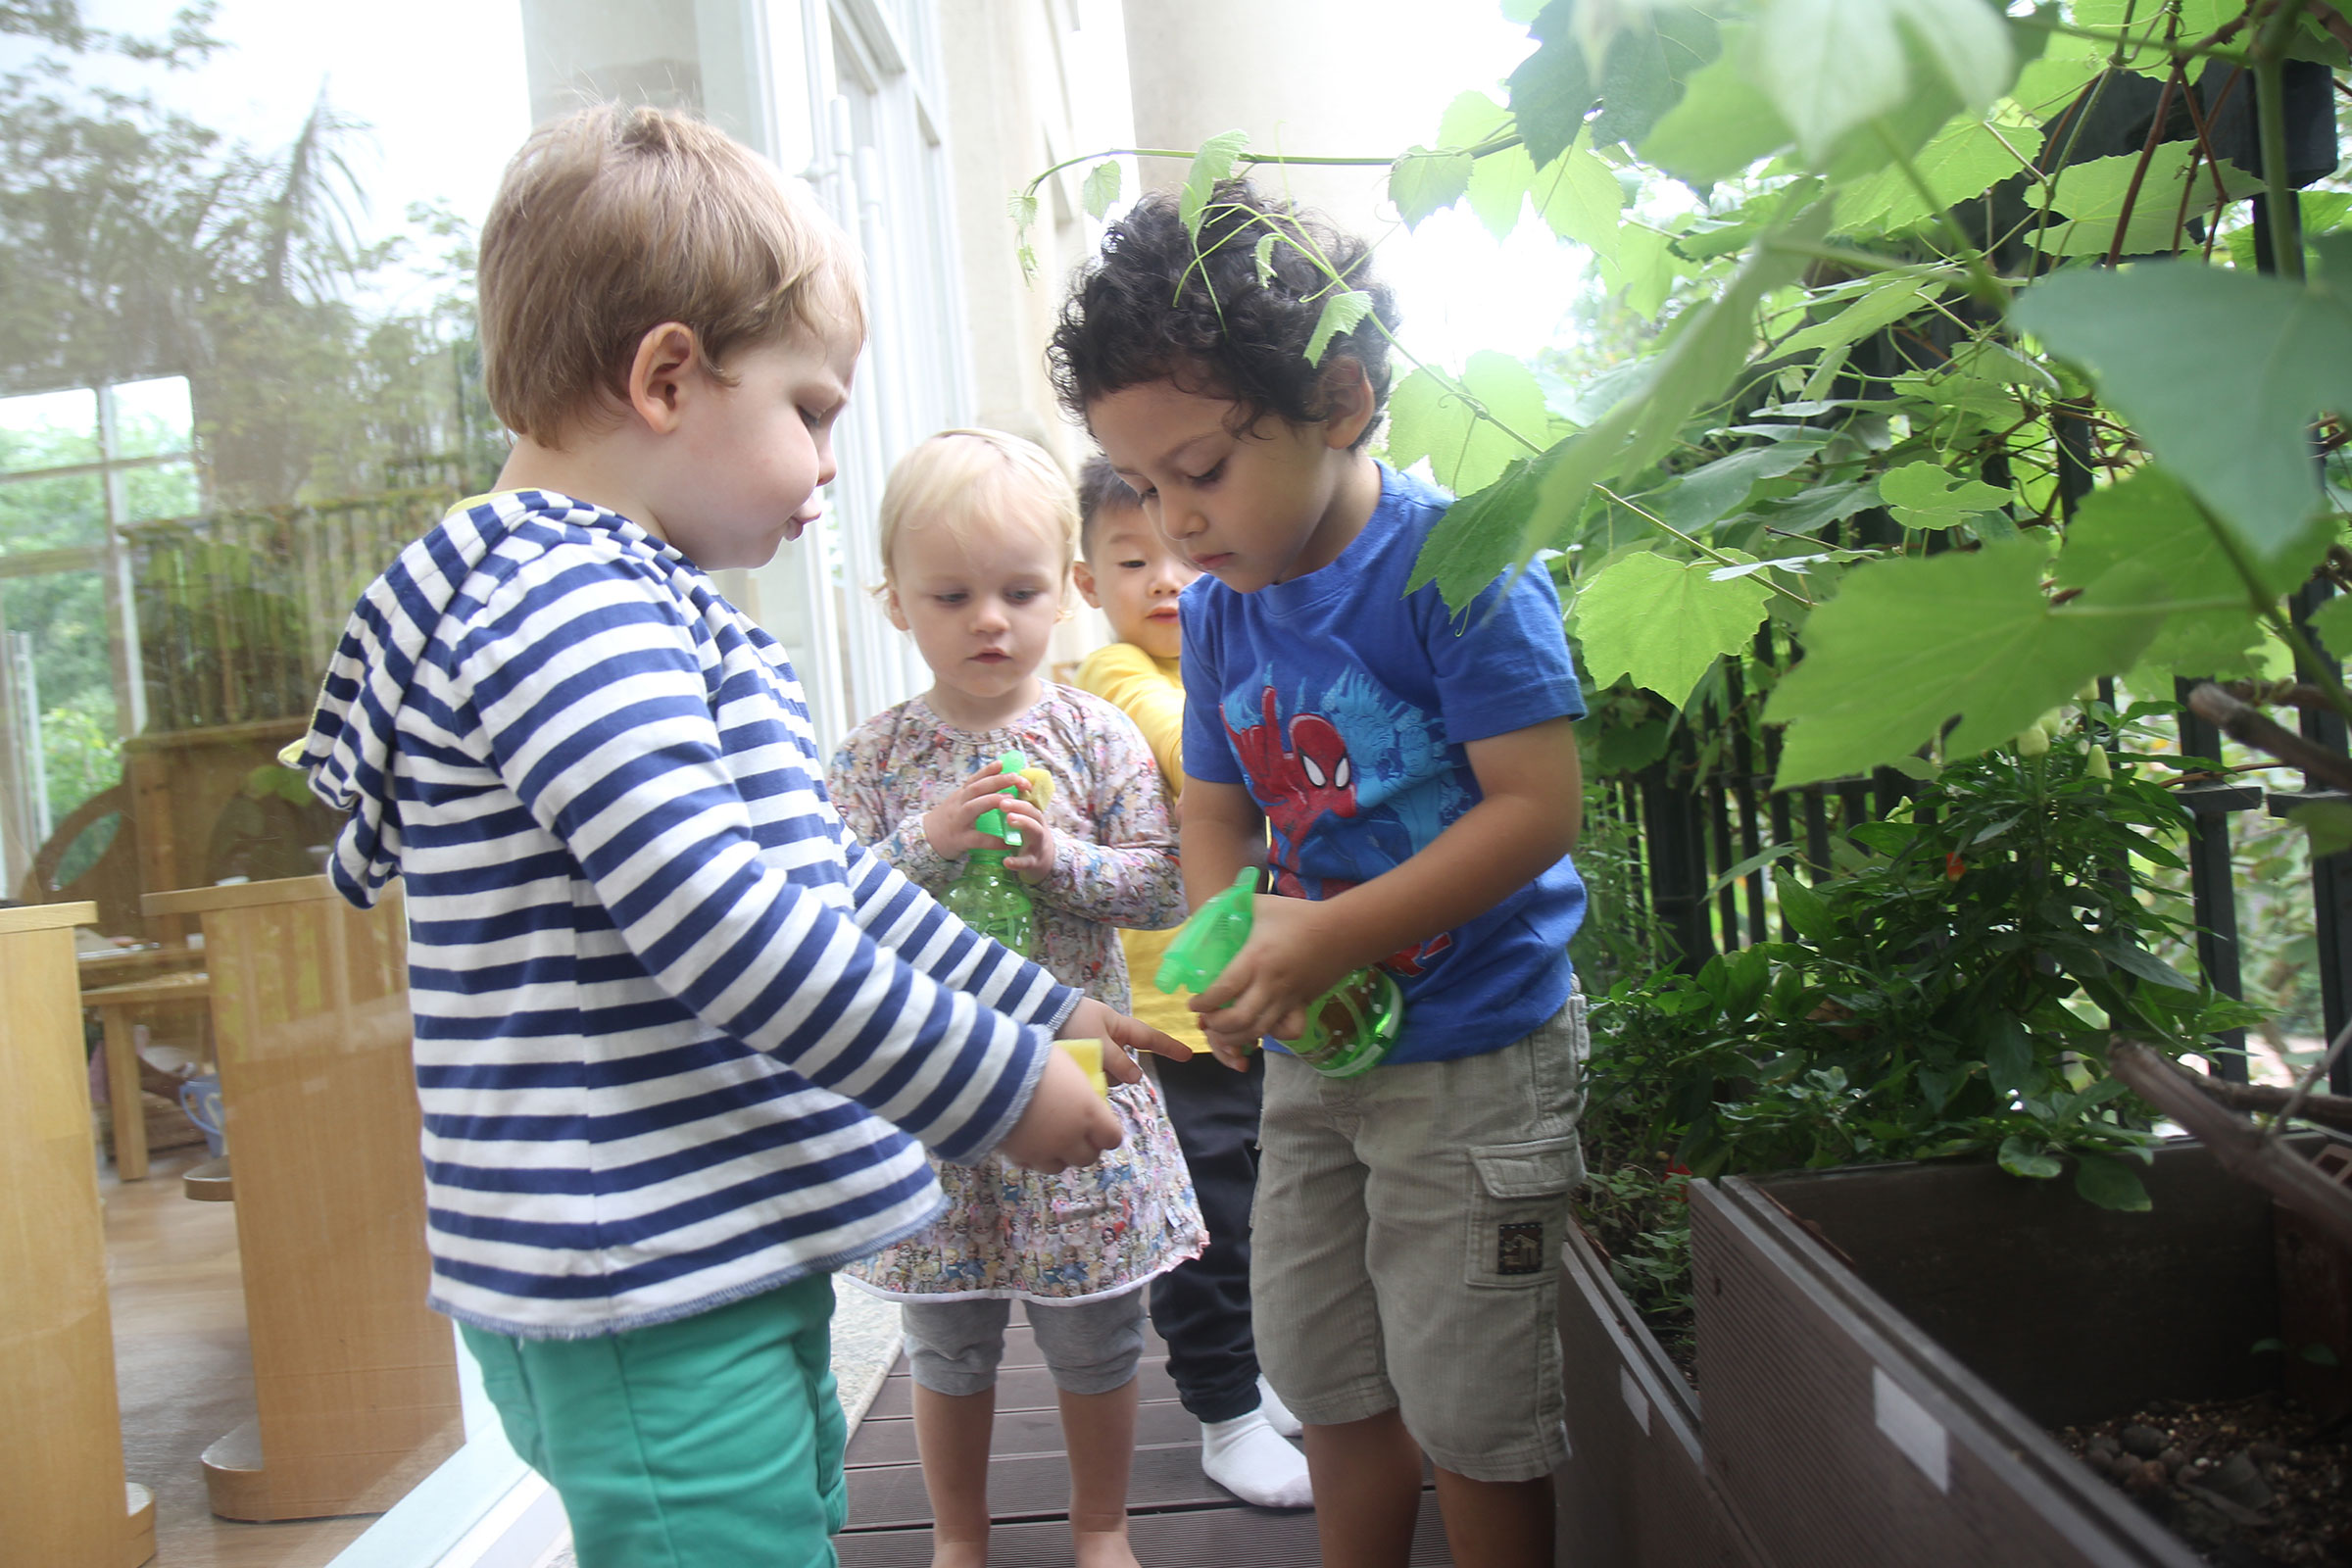 Children from a Montessori classroom outside gardening